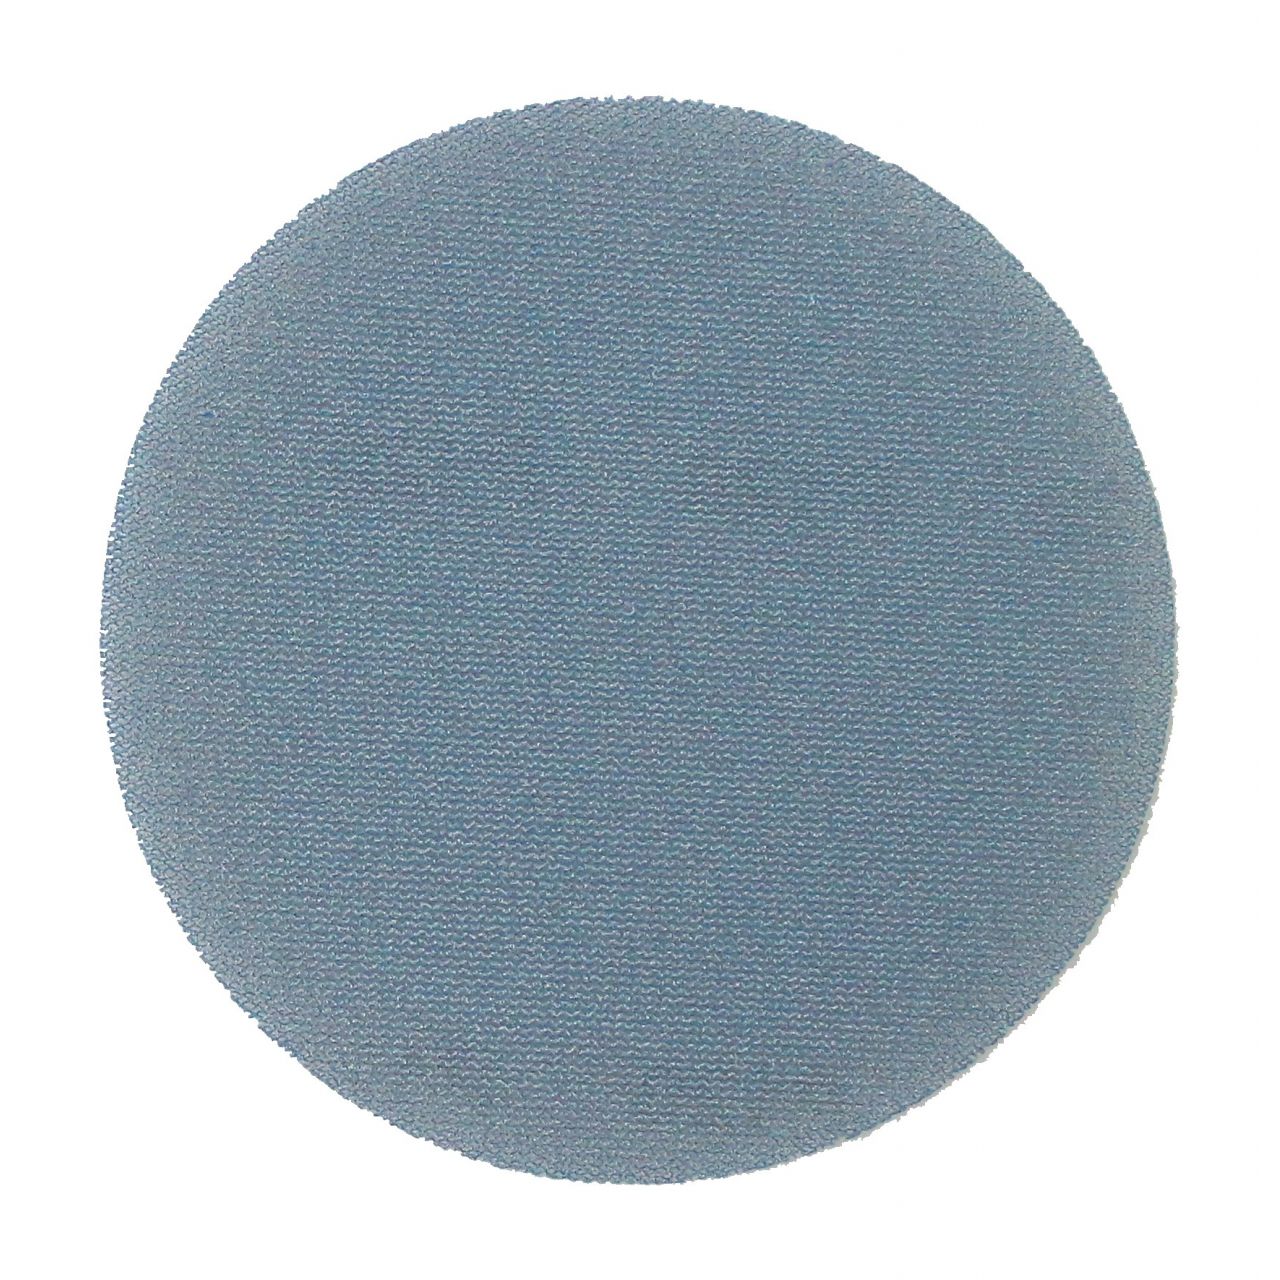 25 Discos de malla abrasiva autoadherente azul MAB (225/80)